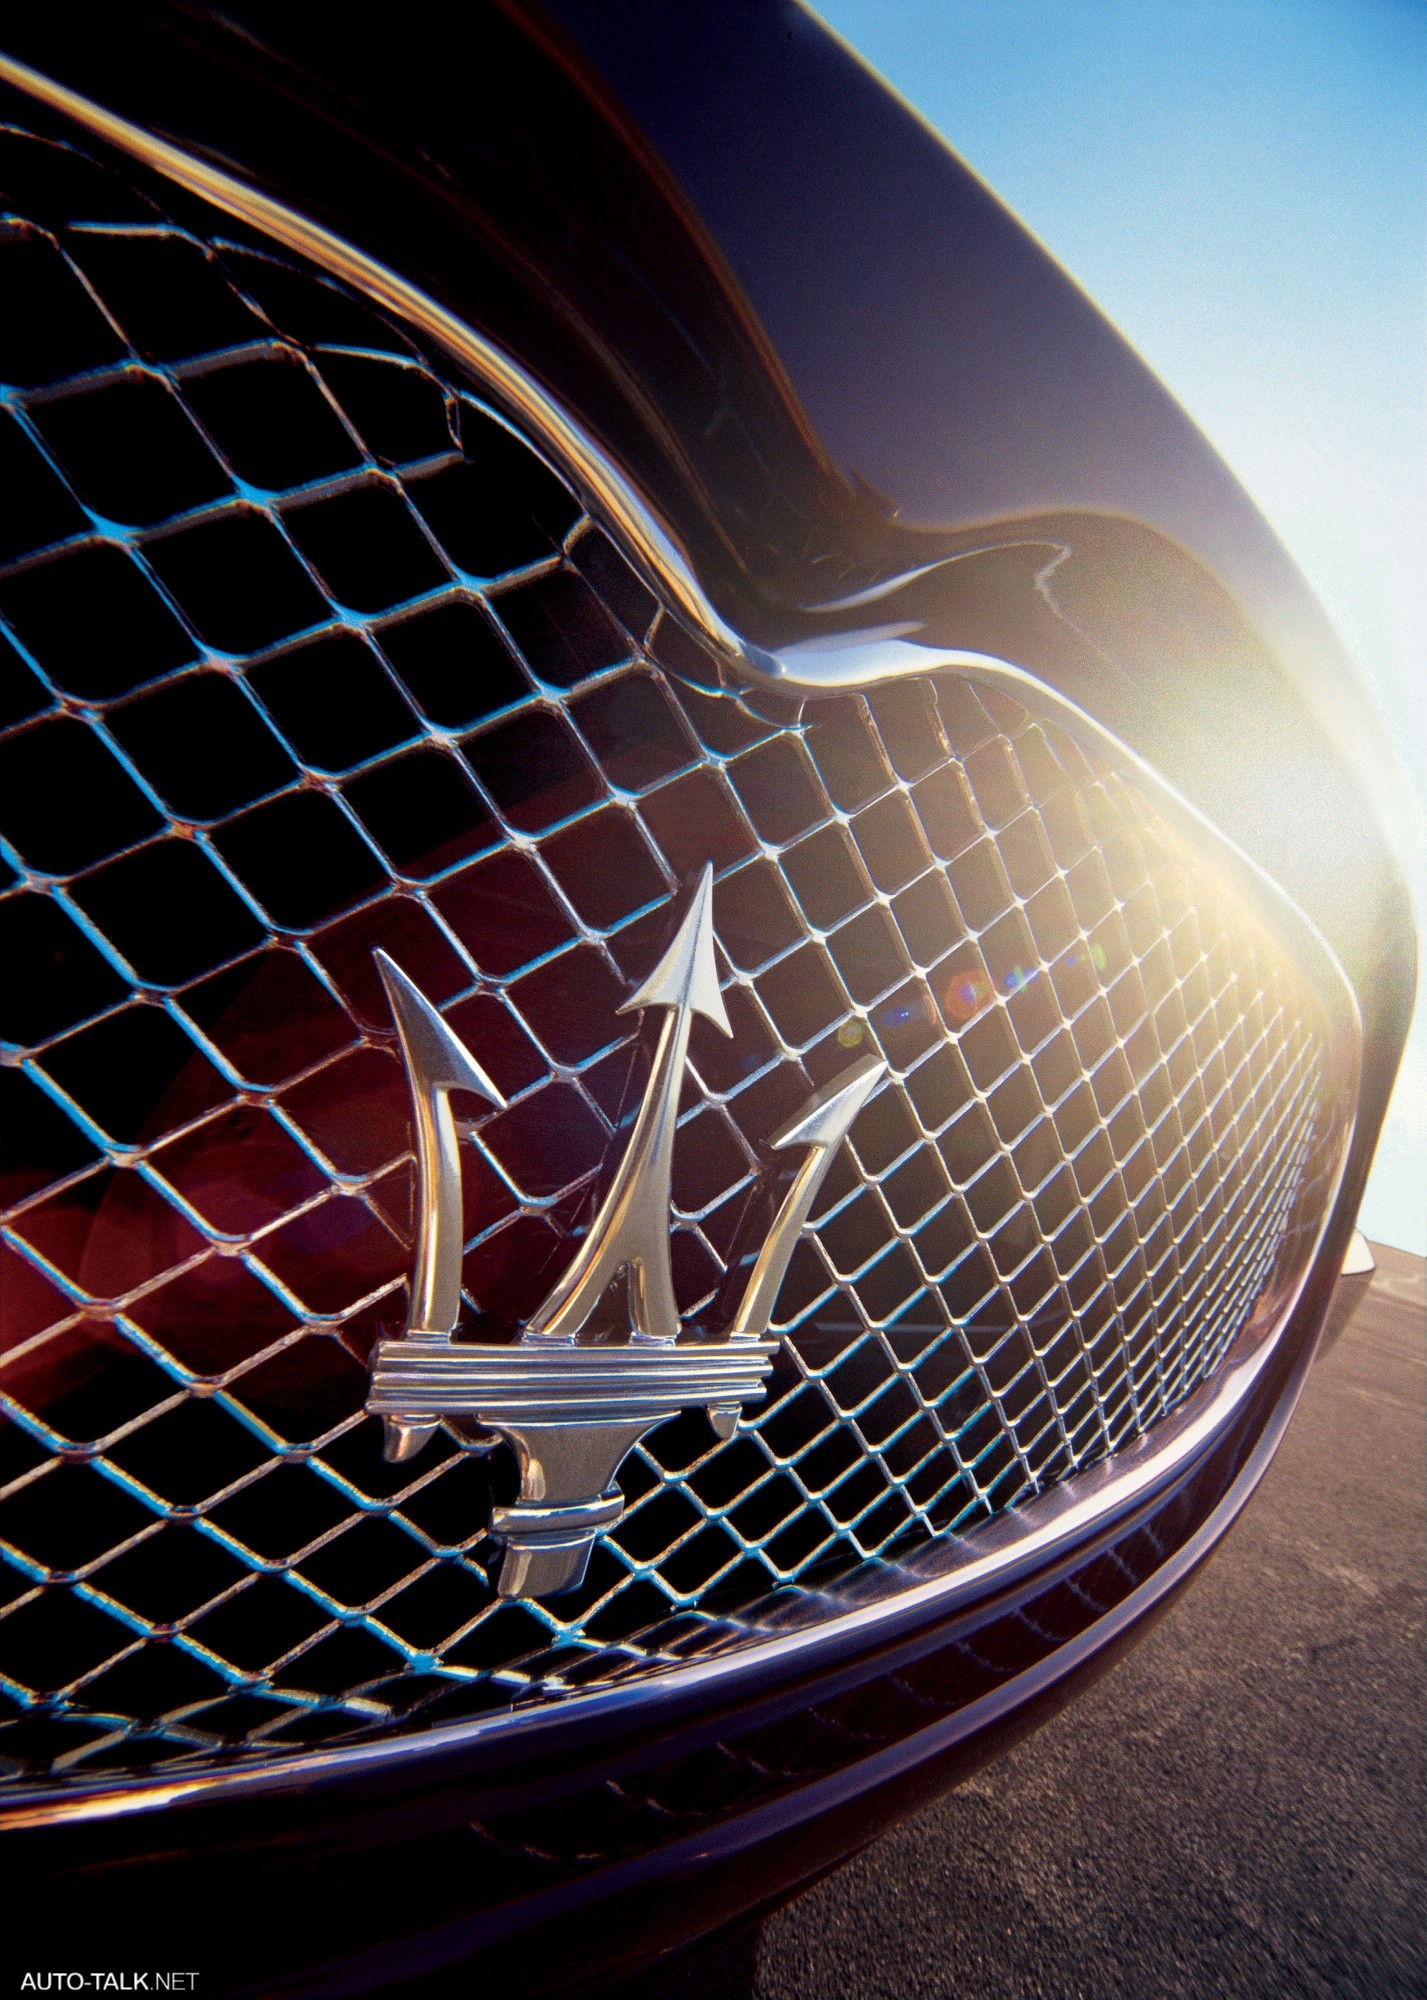 Машина знак трезубец. Maserati Quattroporte Executive gt. Значок Мазератти. Марка машины с трезубцем. Эмблема автомобиля Мазерати.